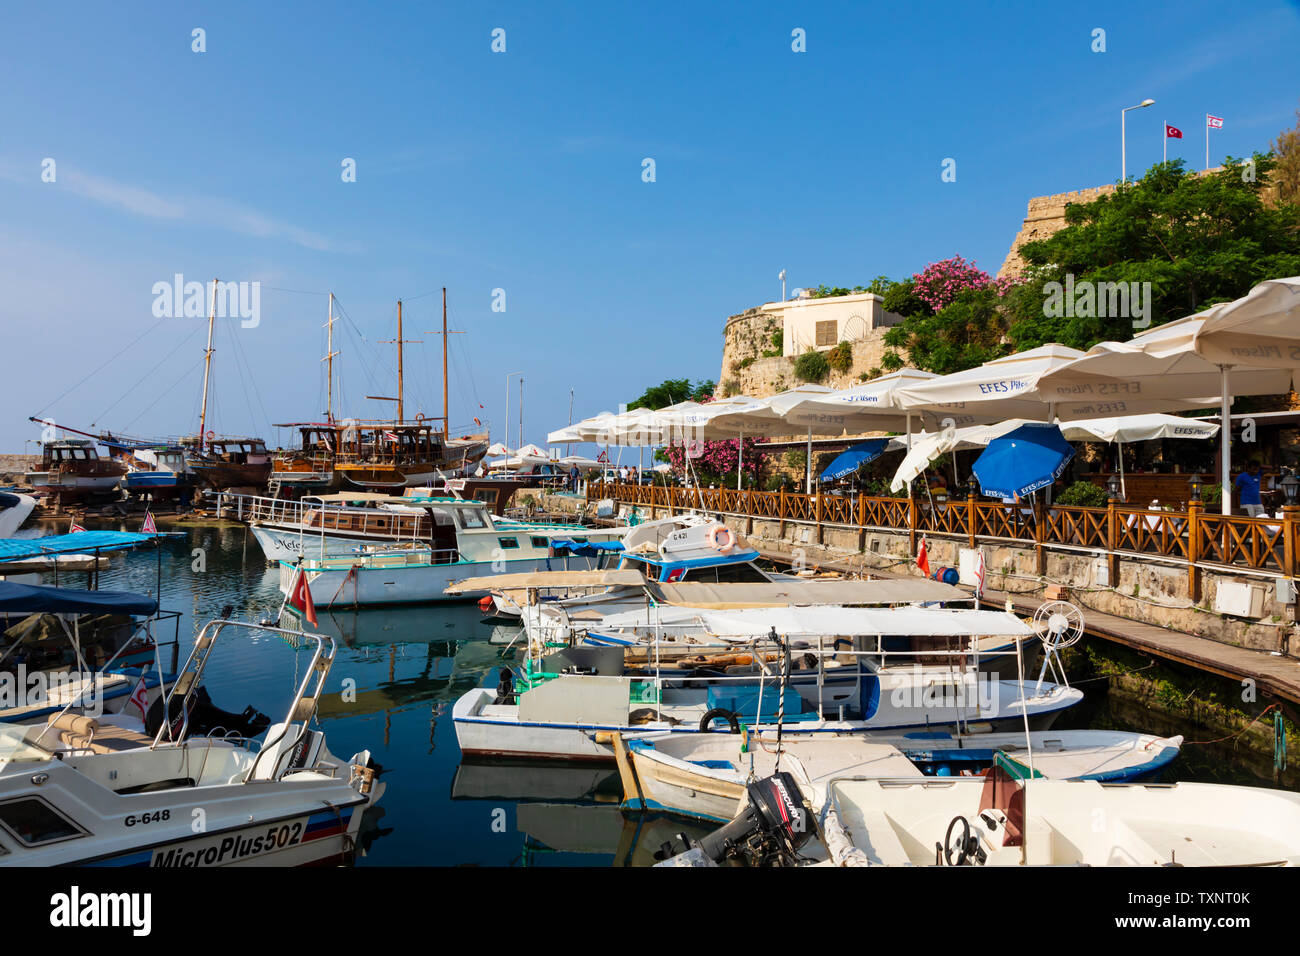 tavernas line the harbour front, Kyrenia, Girne, Turkish Republic of Northern Cyprus. Stock Photo